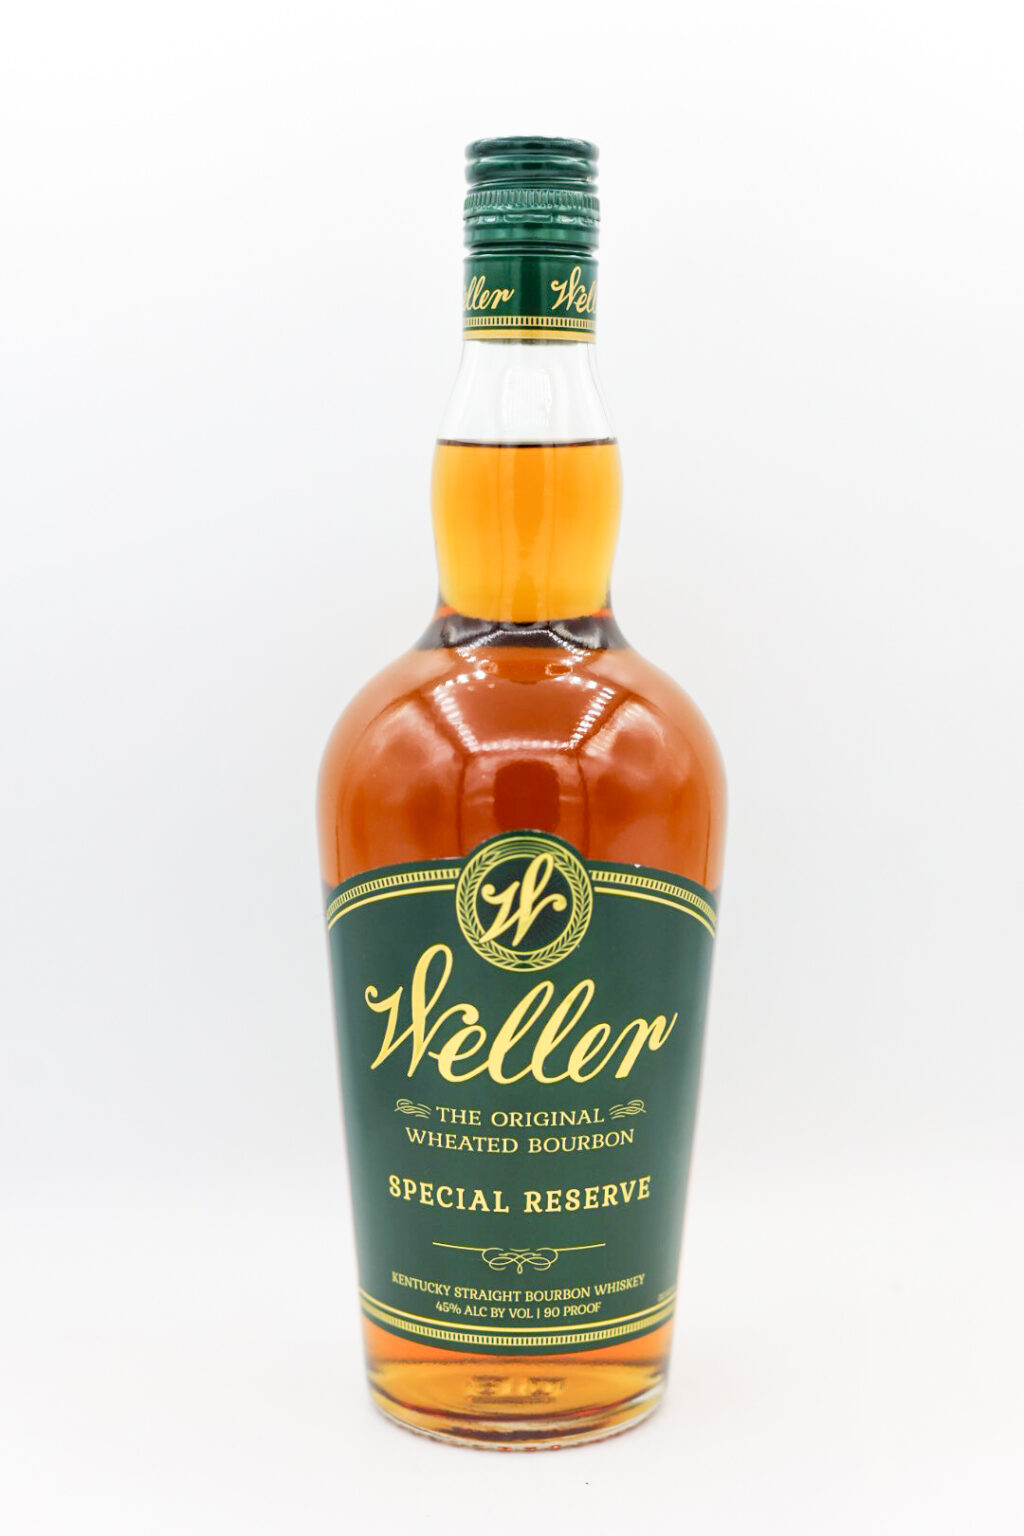 Weller Wheated Bourbon (Green label)